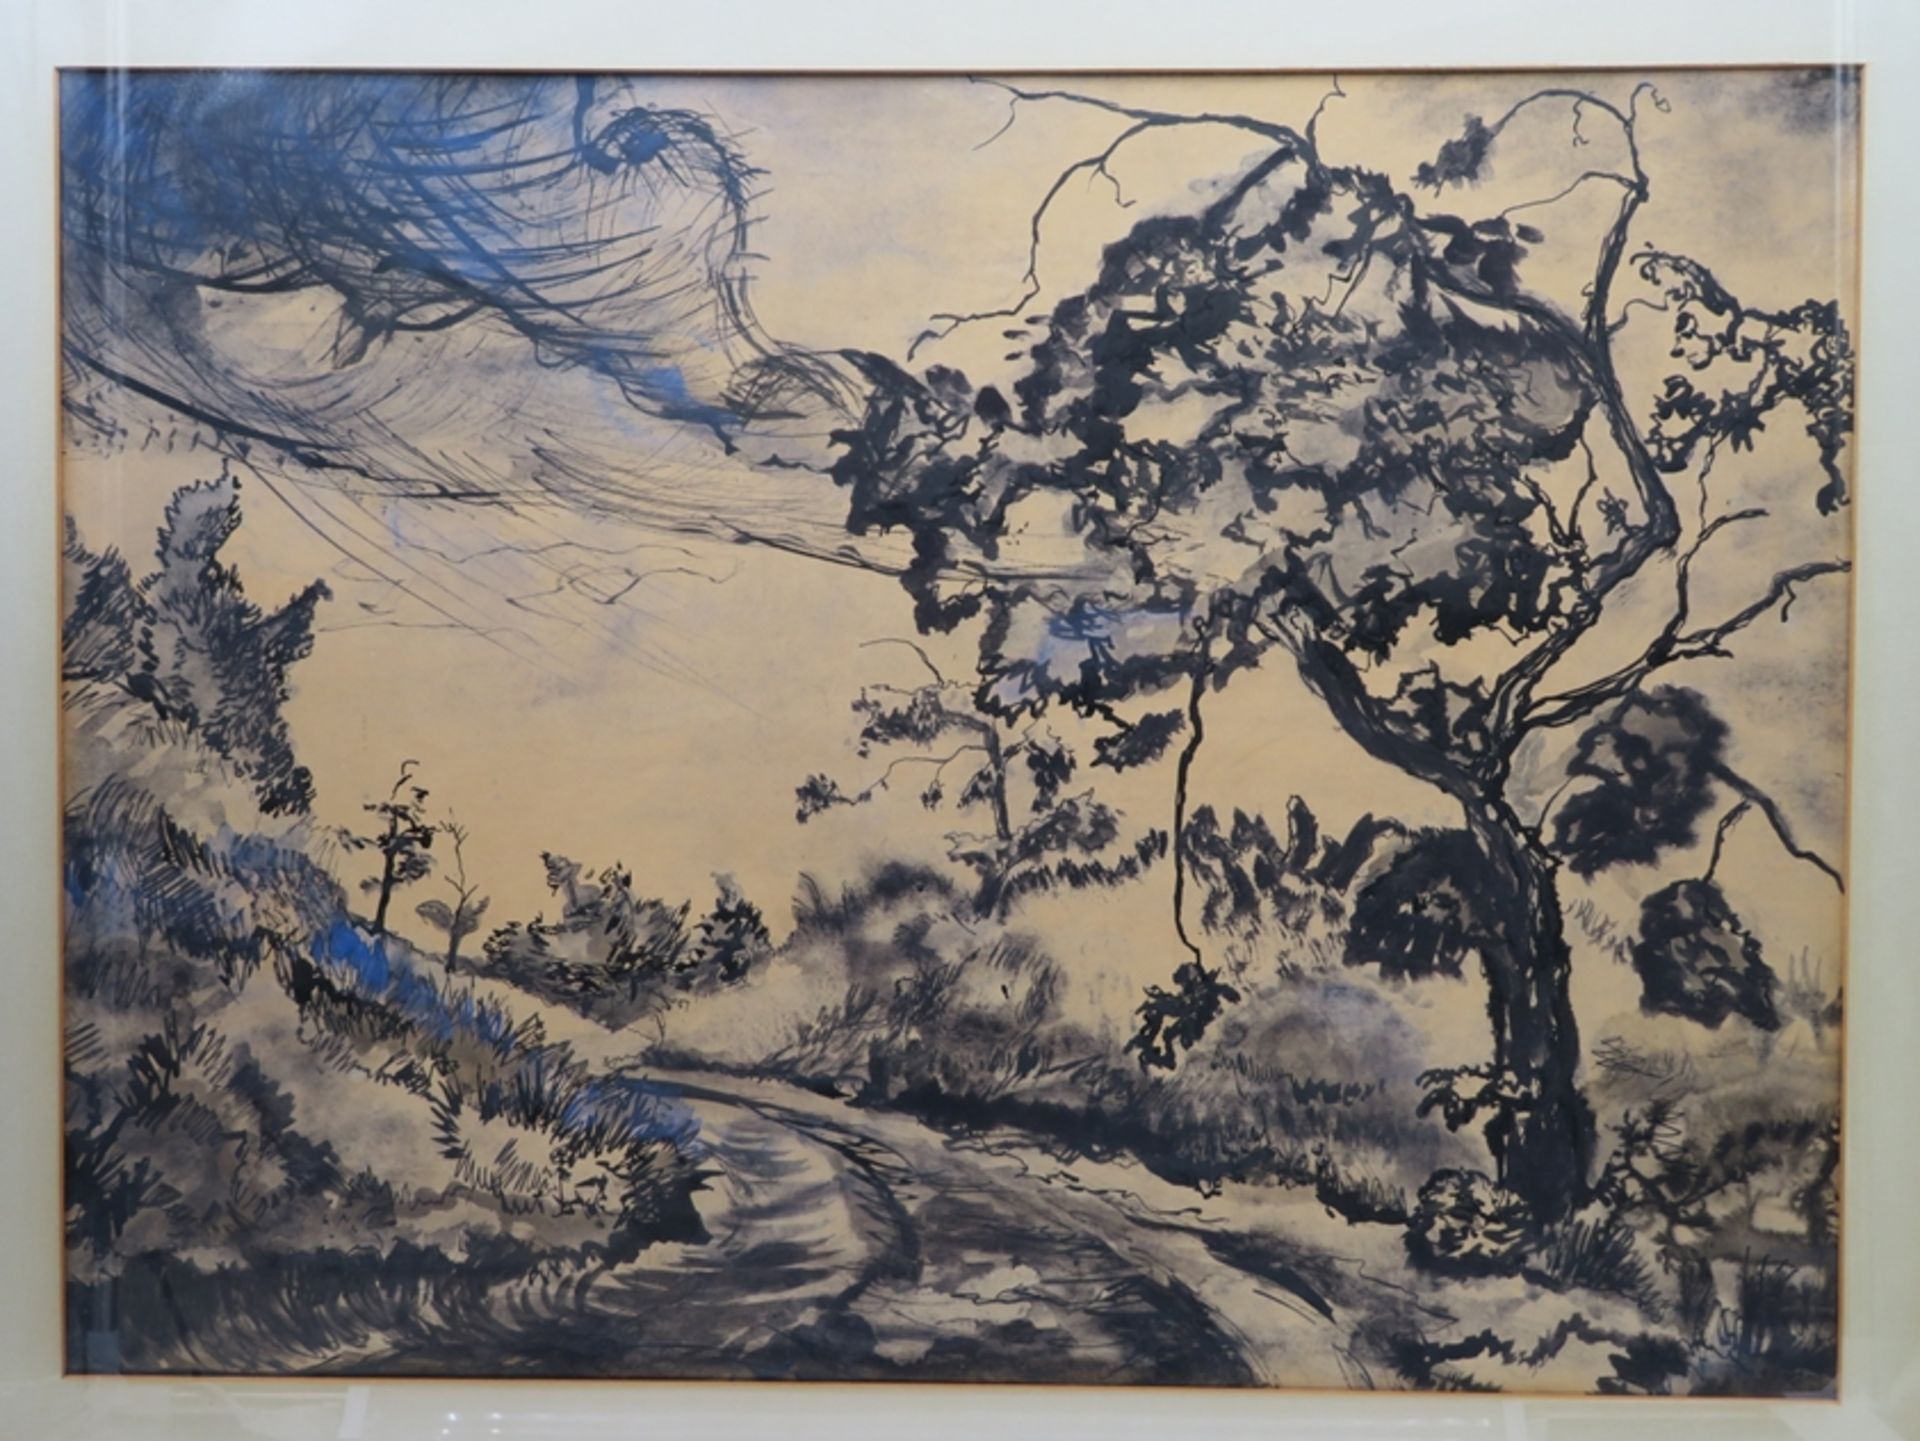 Unbekannt, wohl China/Japan, 1. Hälfte 20. Jahrhundert, "Bewaldeter Weg", Tusche/Aquarell, 44,5 x 6